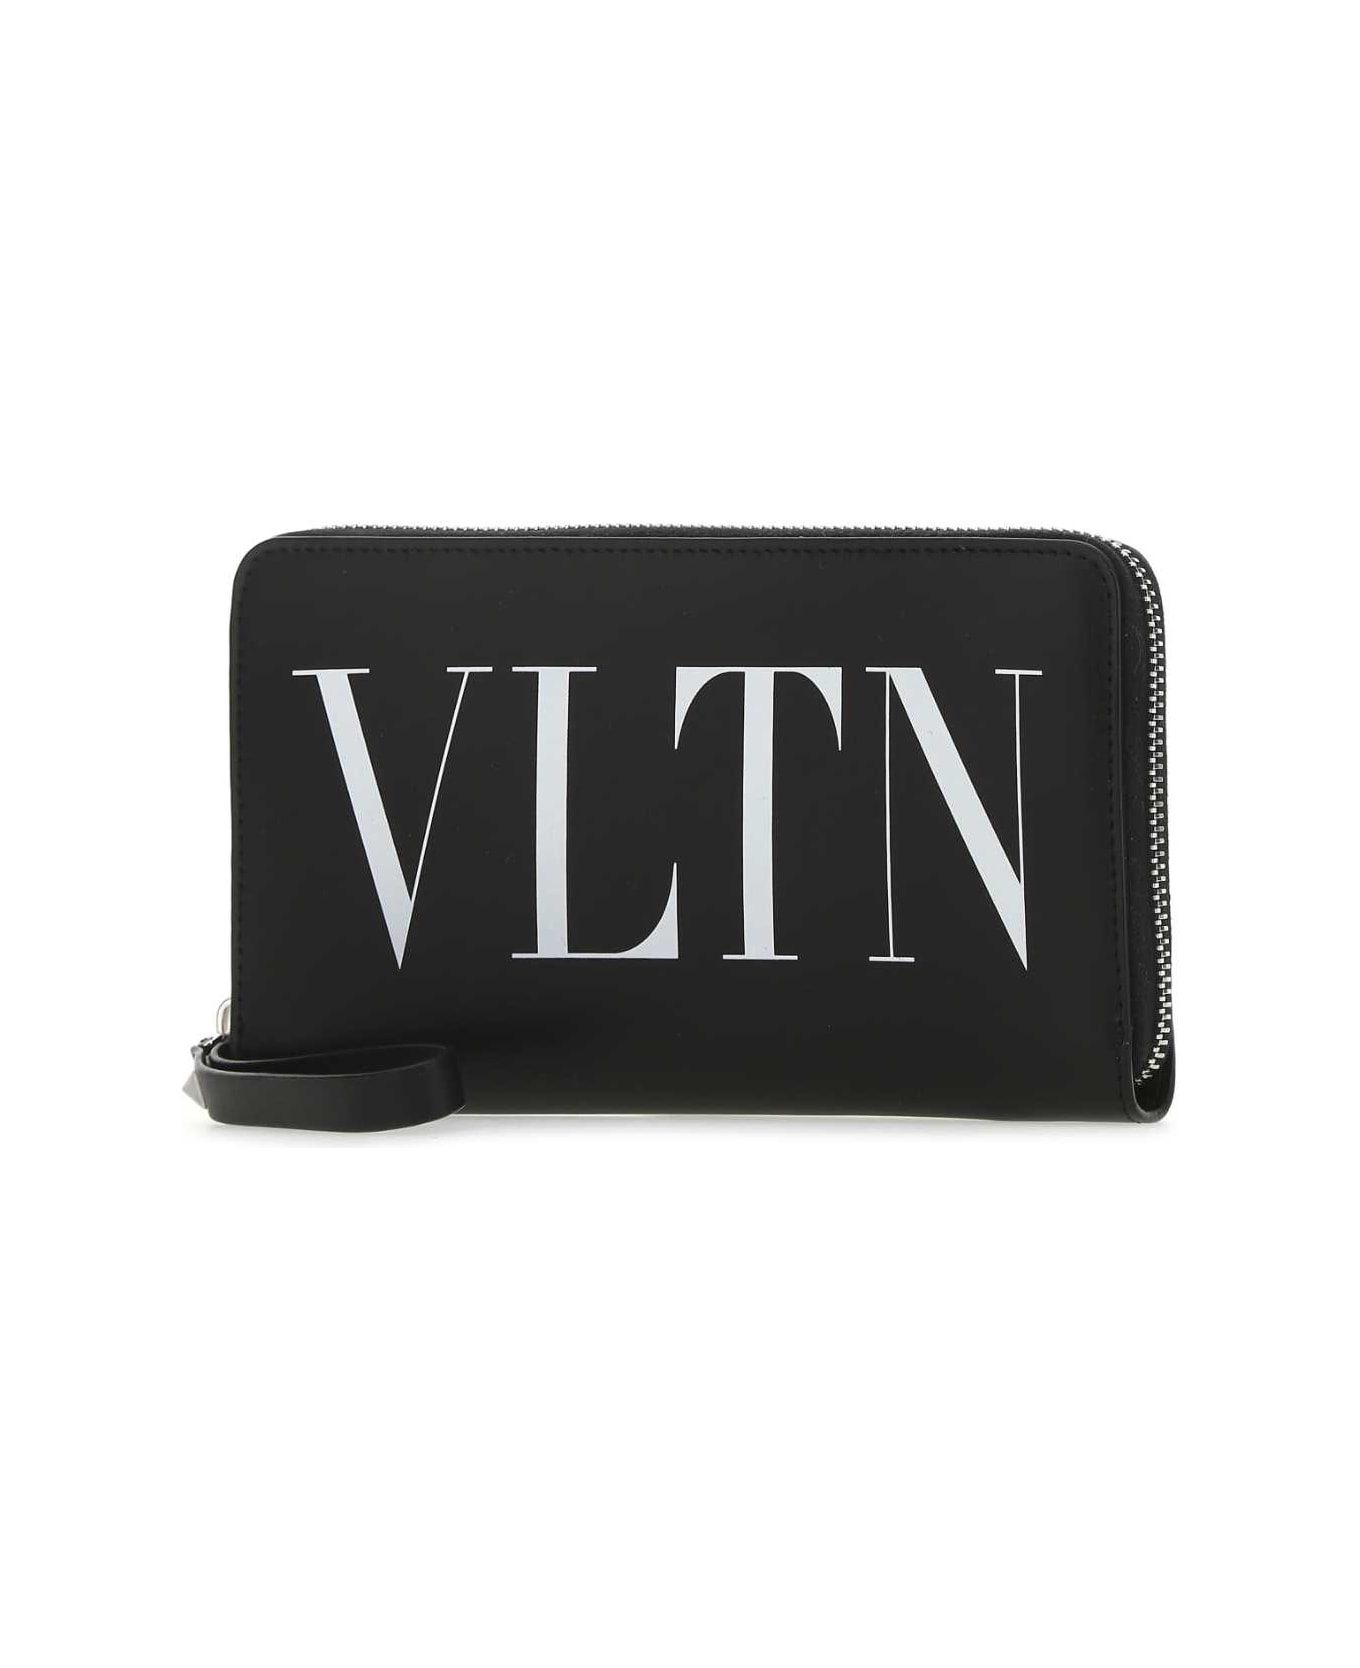 Valentino Garavani Black Leather Vltn Wallet - NERBIA